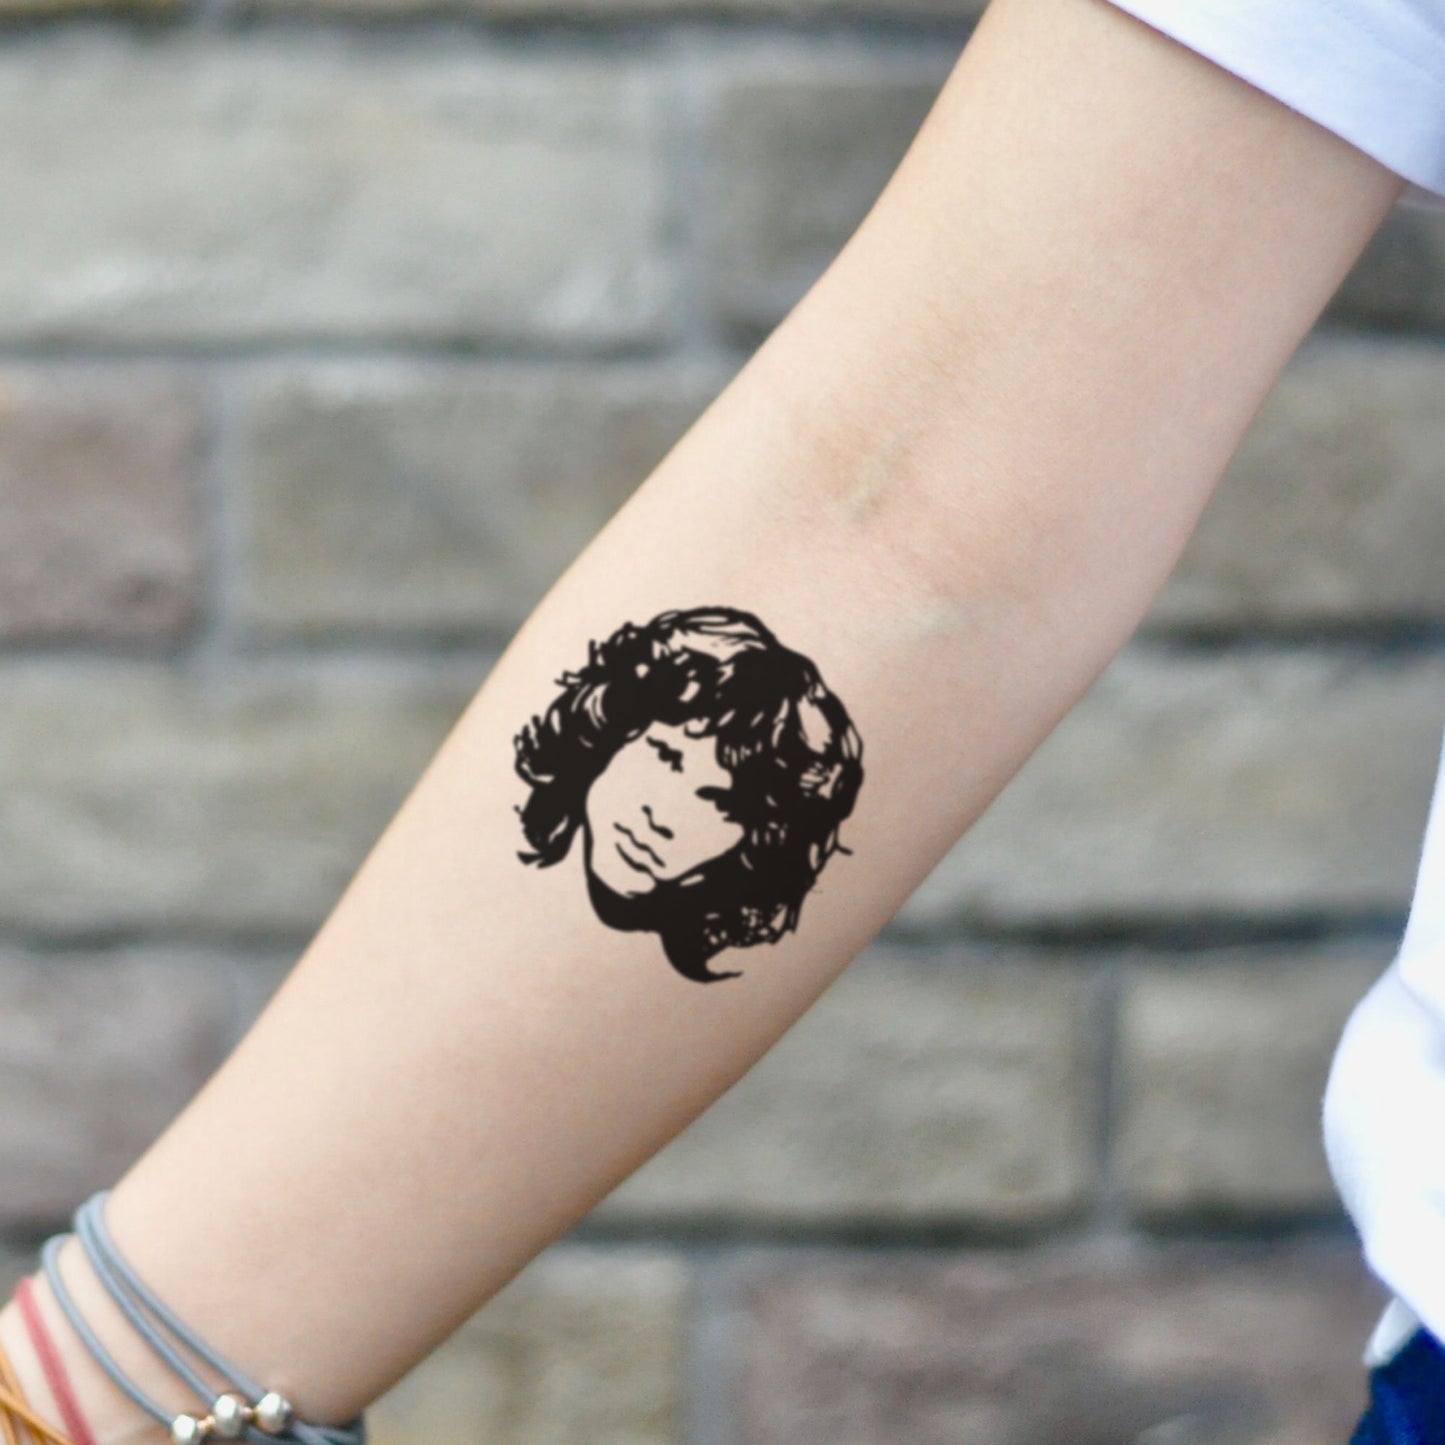 fake small jim morrison portrait temporary tattoo sticker design idea on inner arm